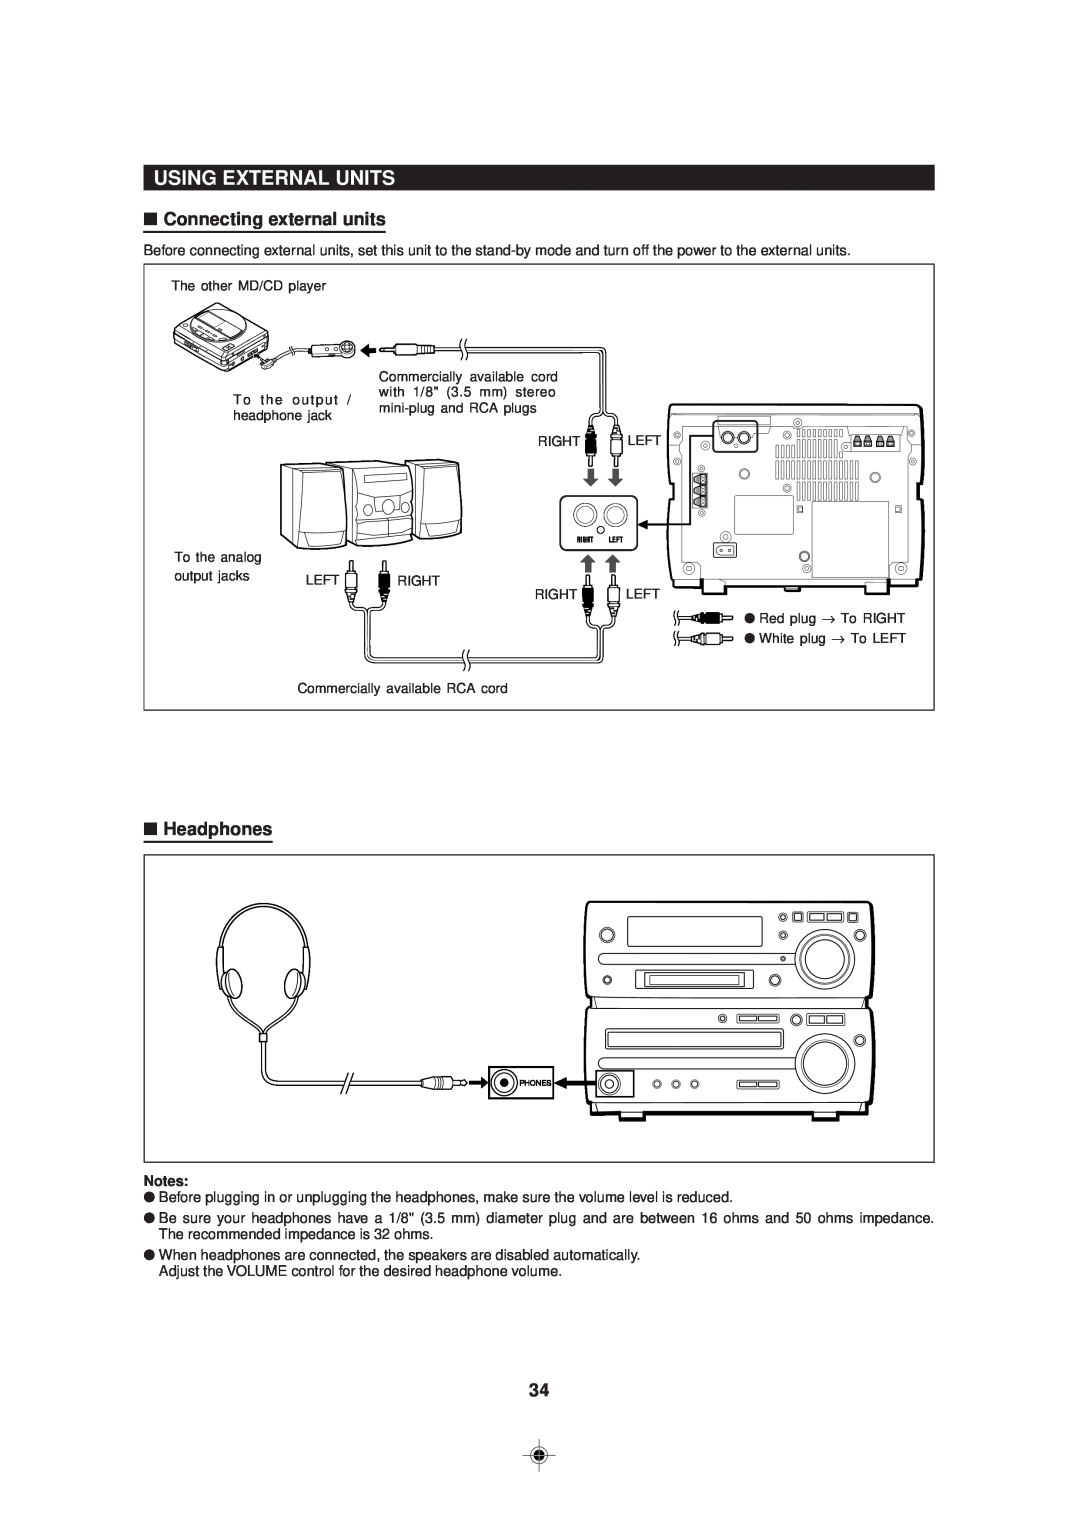 Sharp MD-MX30 MD operation manual Using External Units, Connecting external units, Headphones 